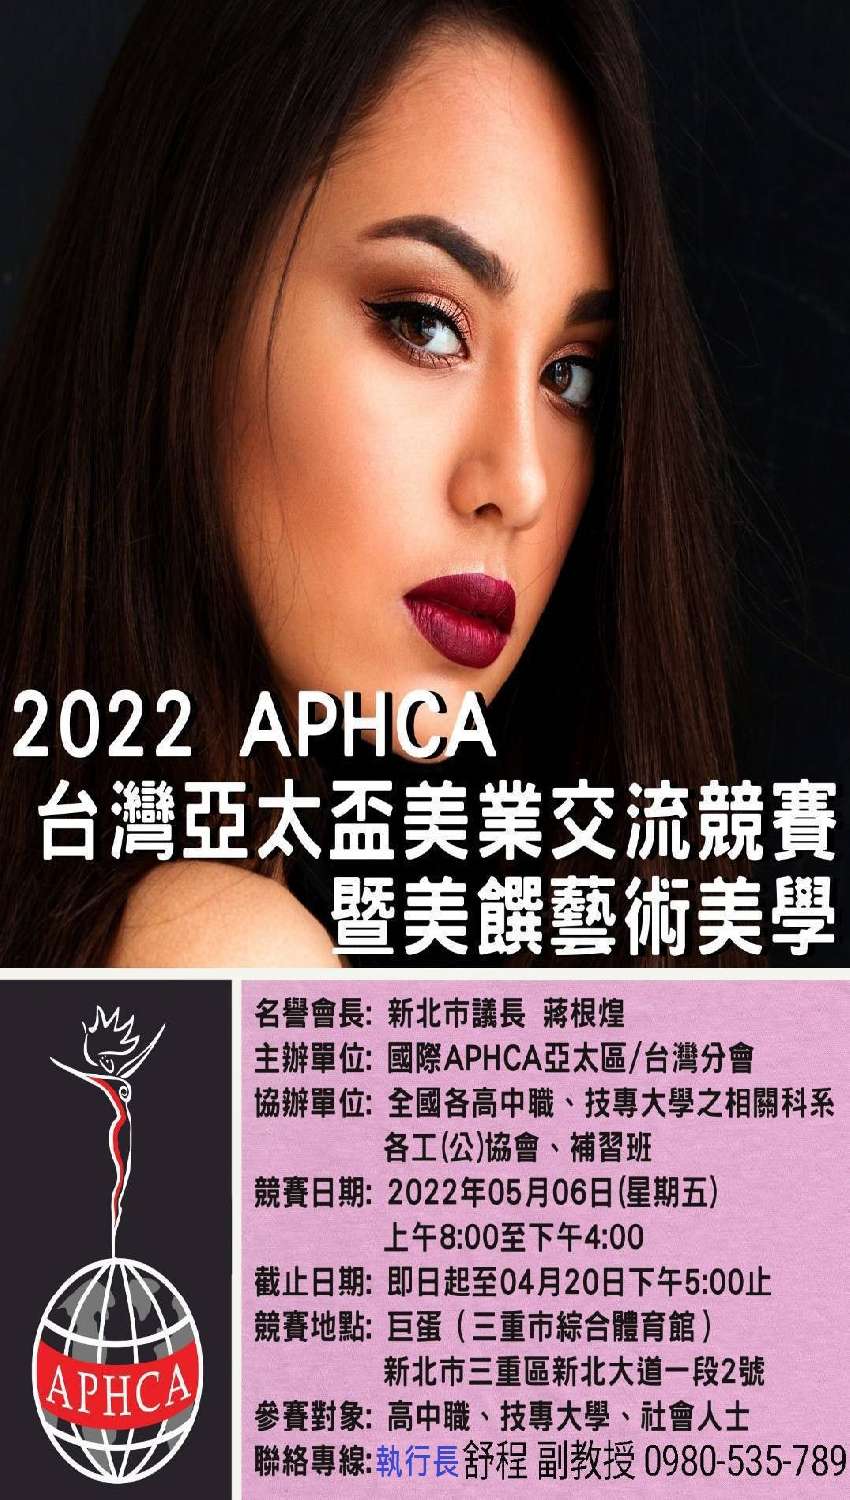 *2022 APHC